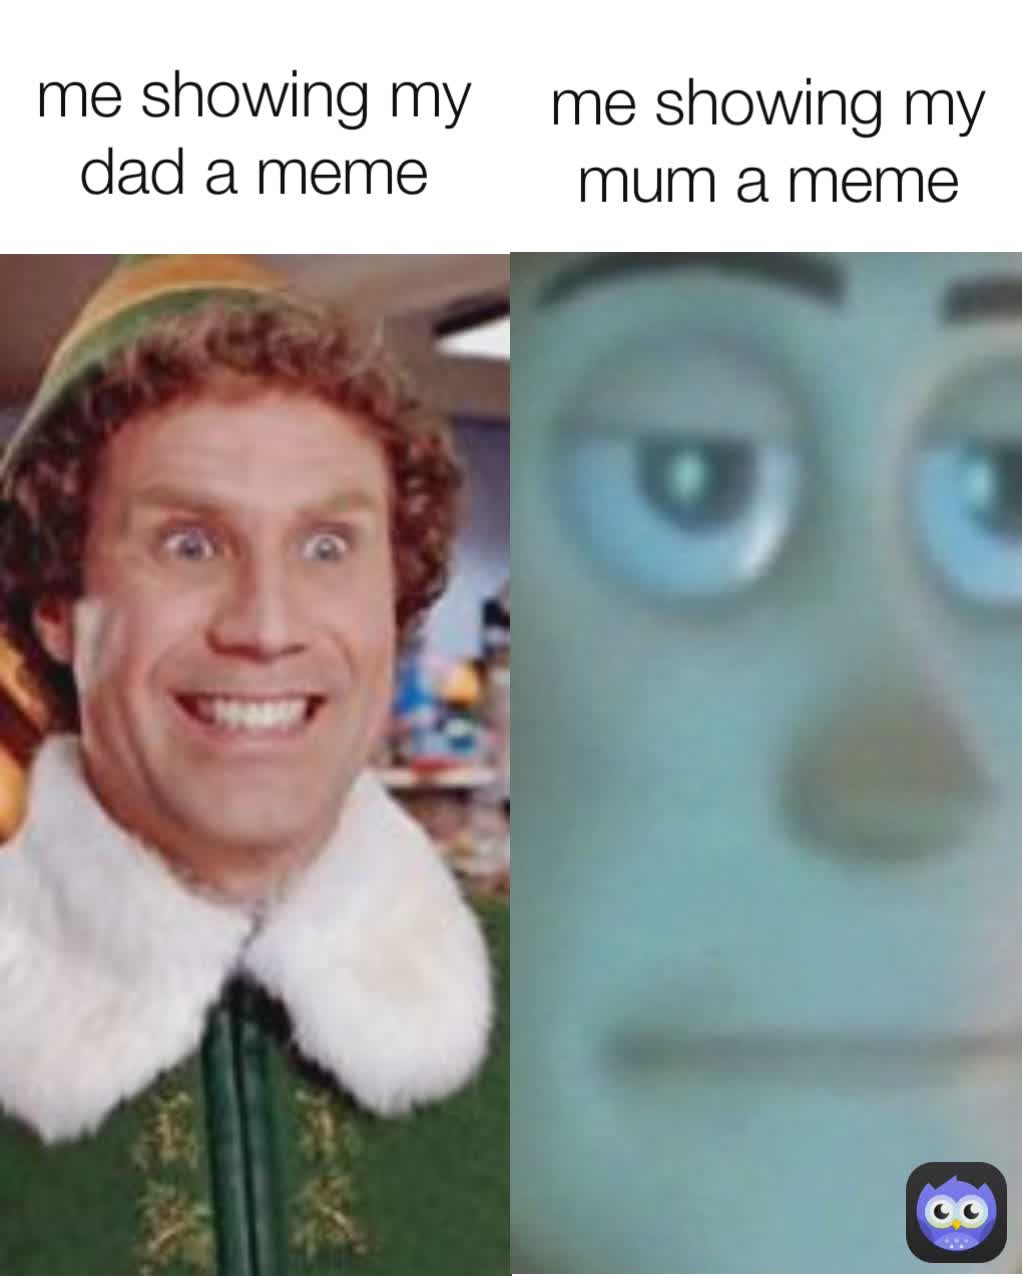 me showing my mum a meme me showing my dad a meme